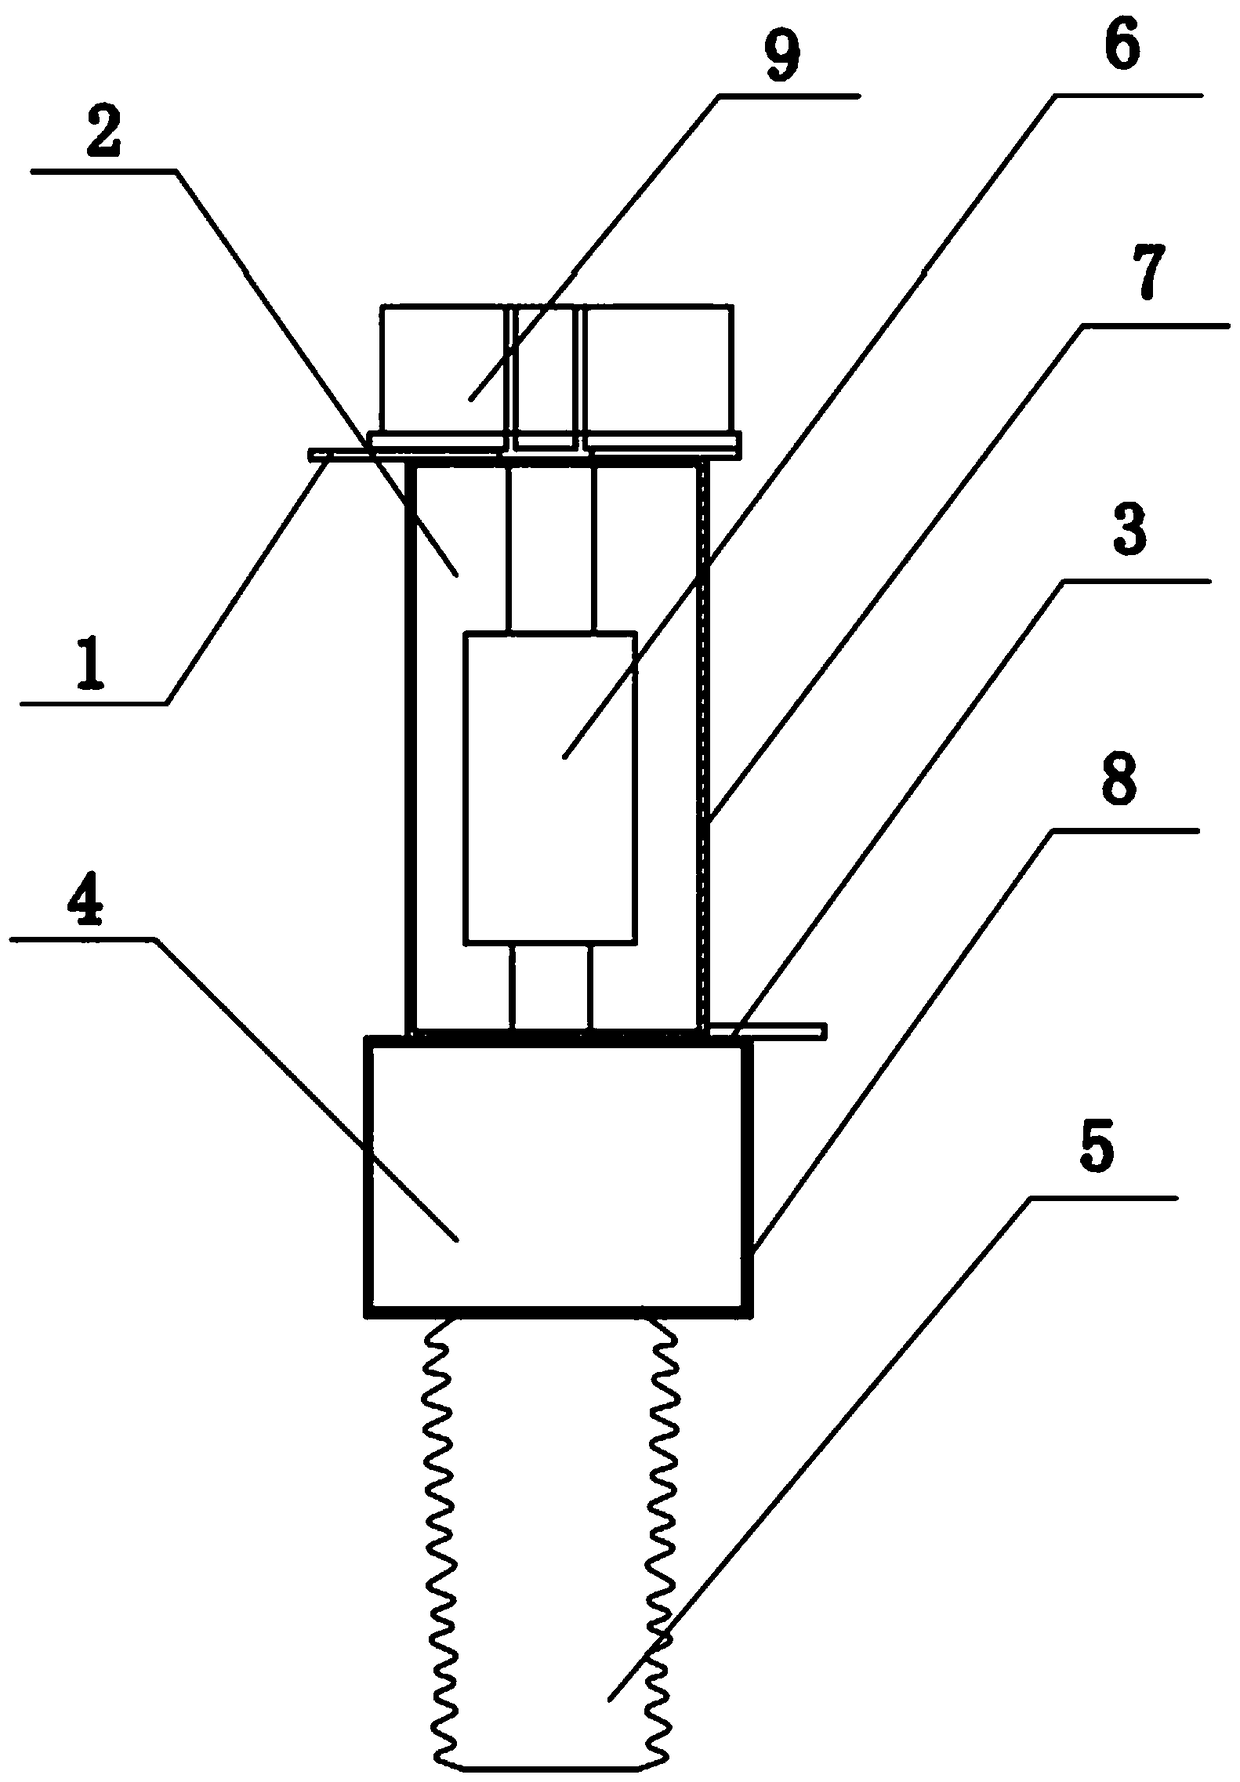 Vacuum circuit breaker